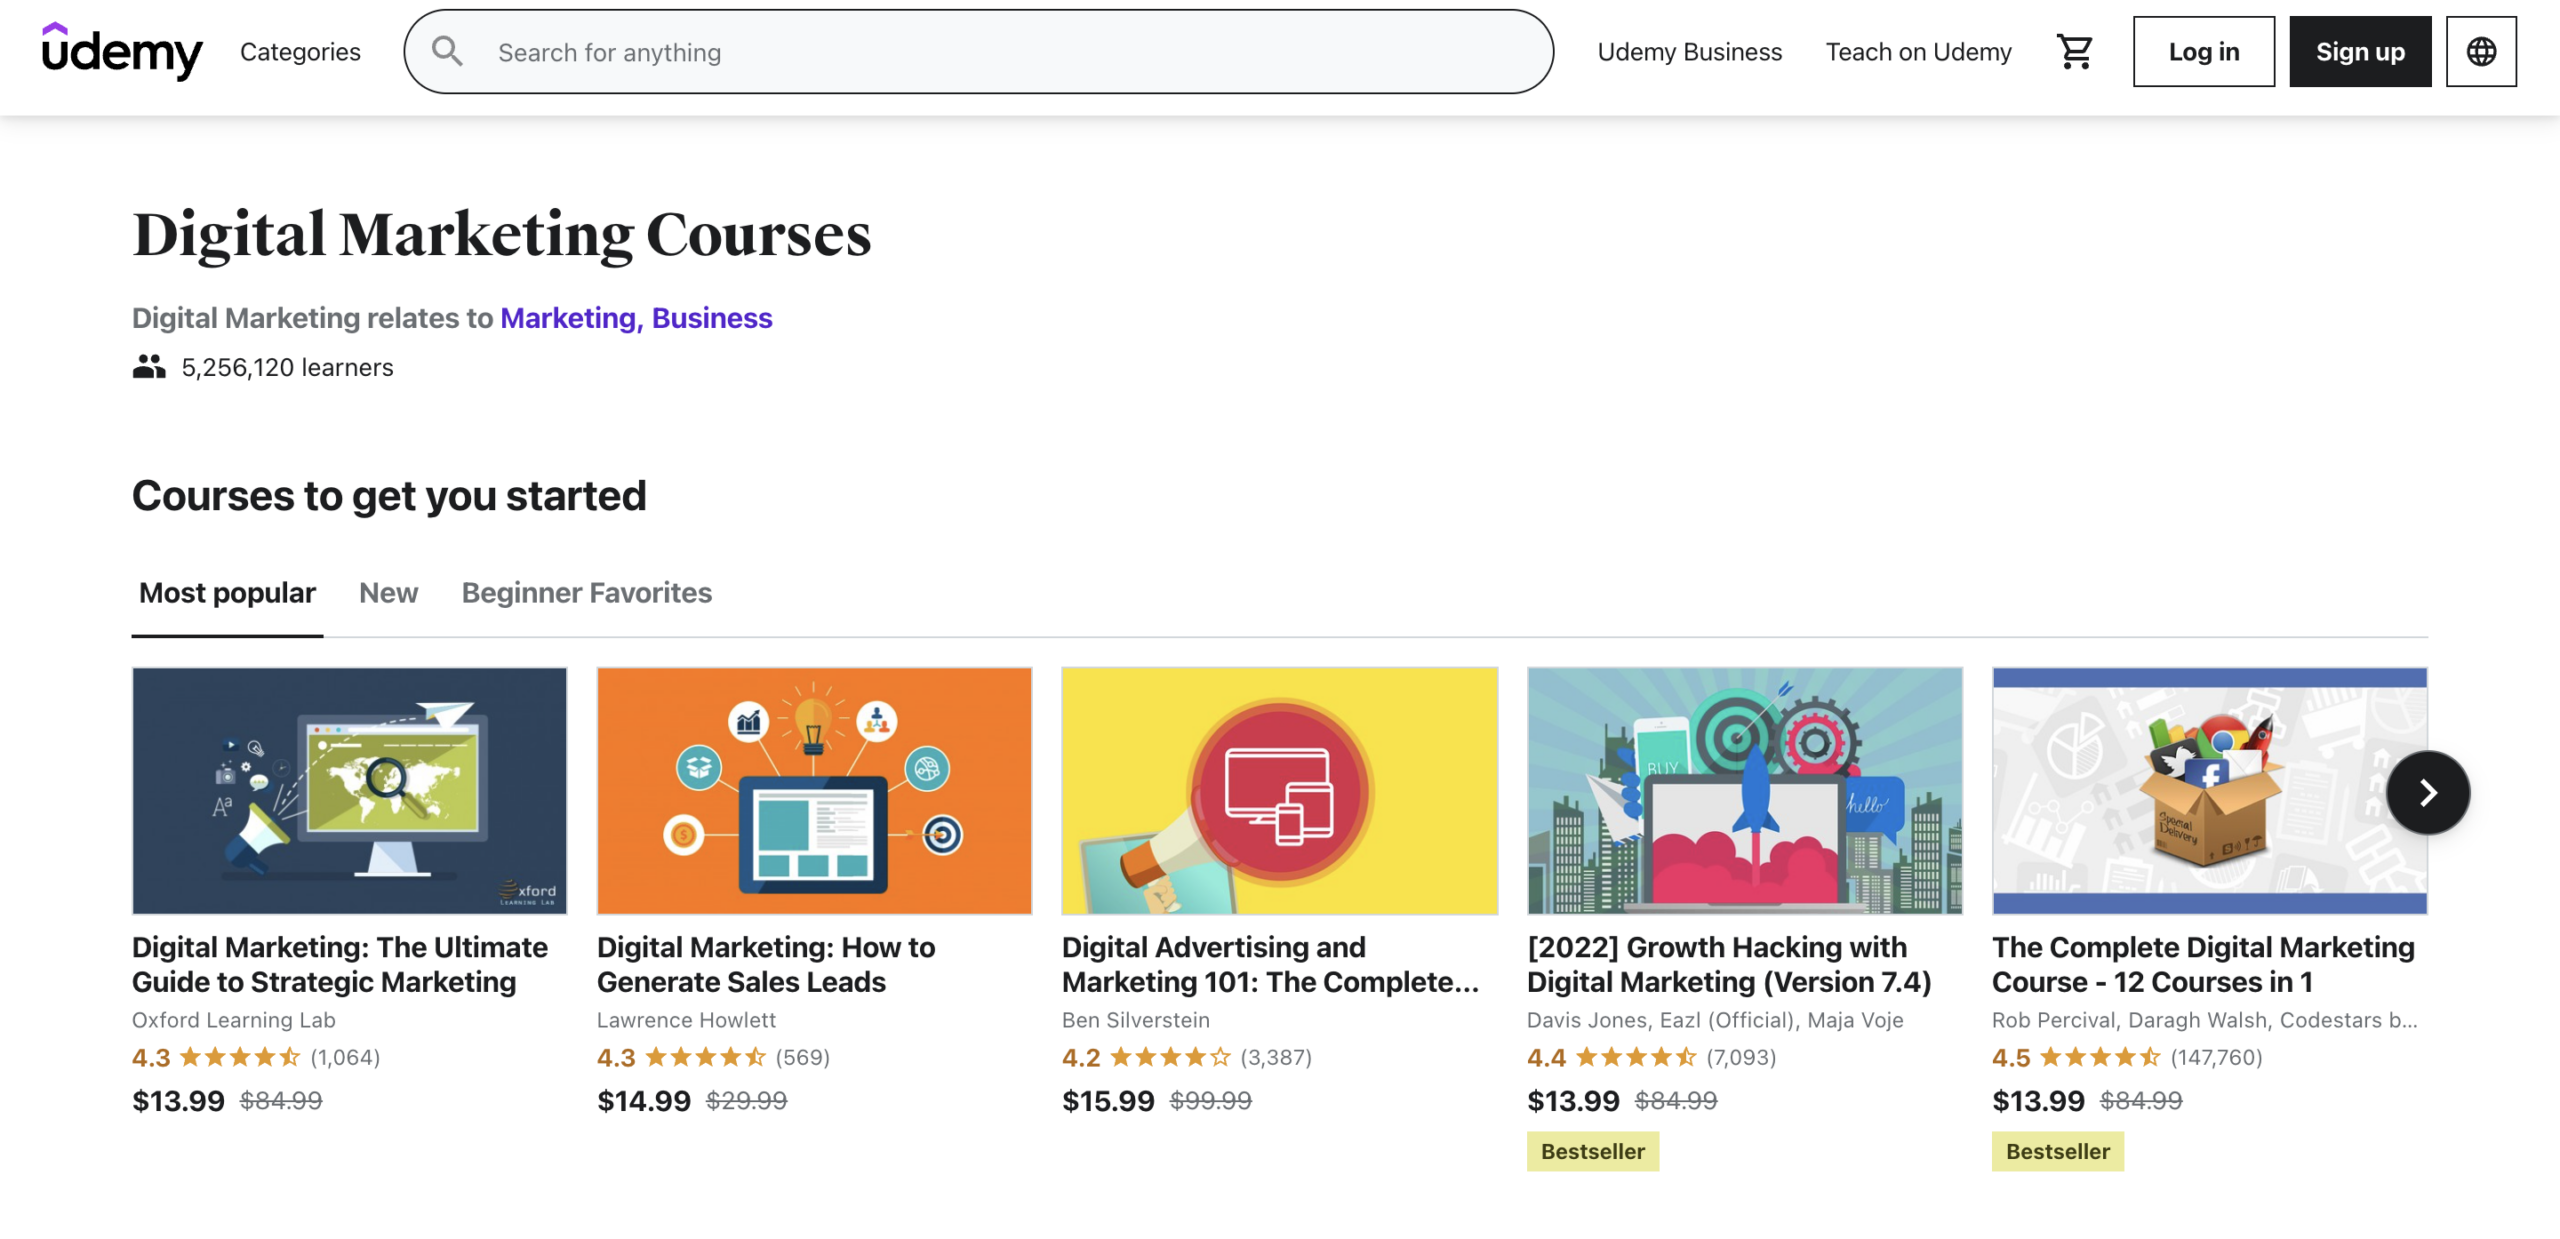 10 Digital Marketing Courses 